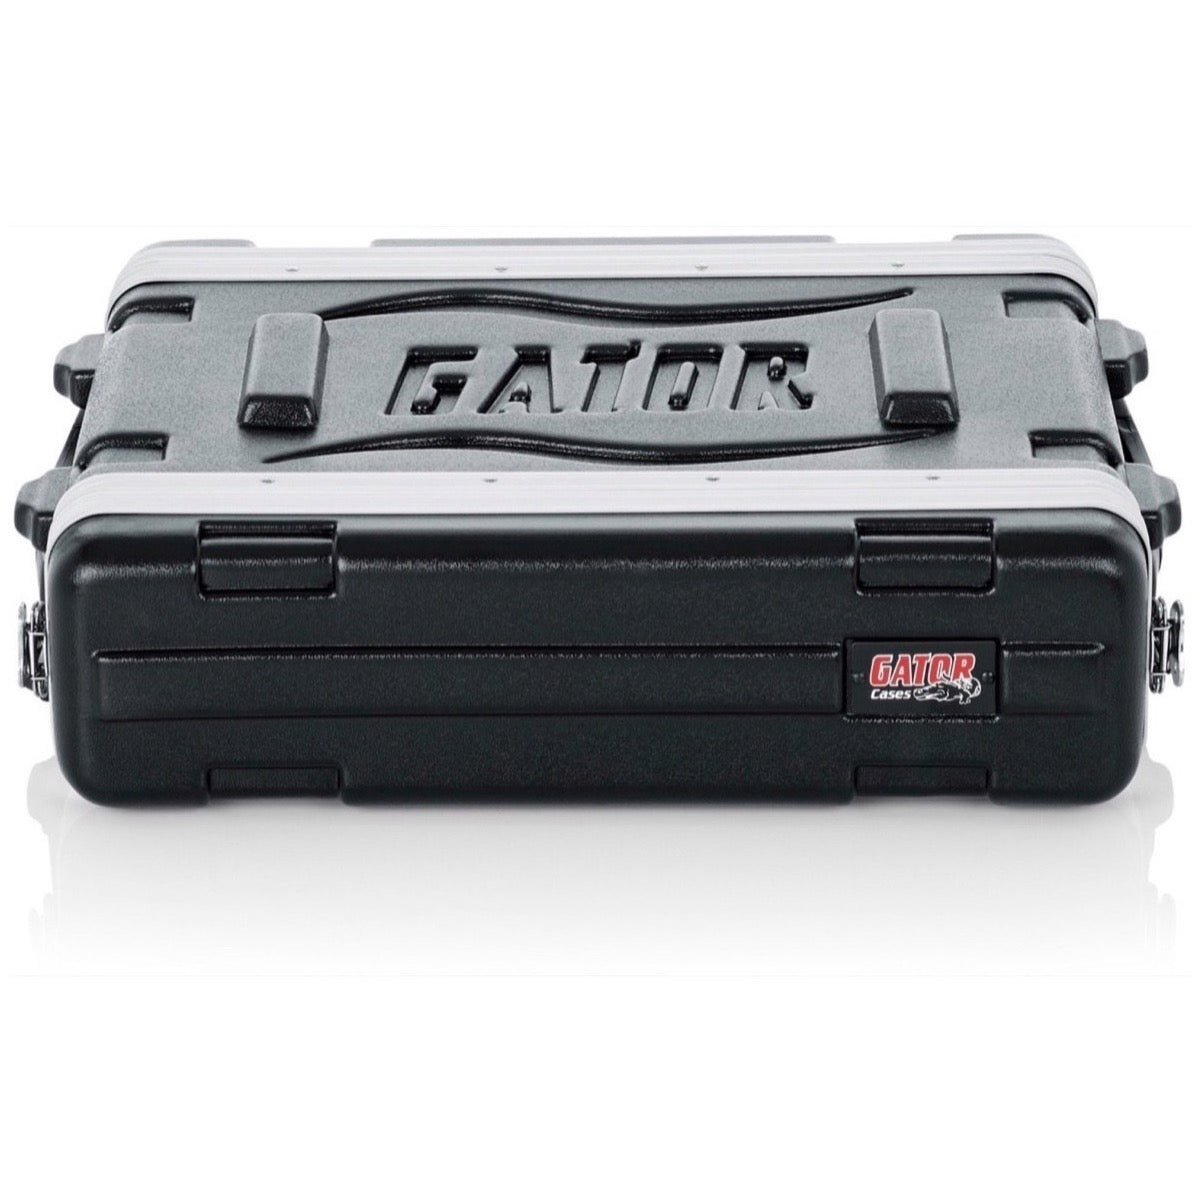 Gator Shallow Audio Rack Case, GR-2S, 2-Space